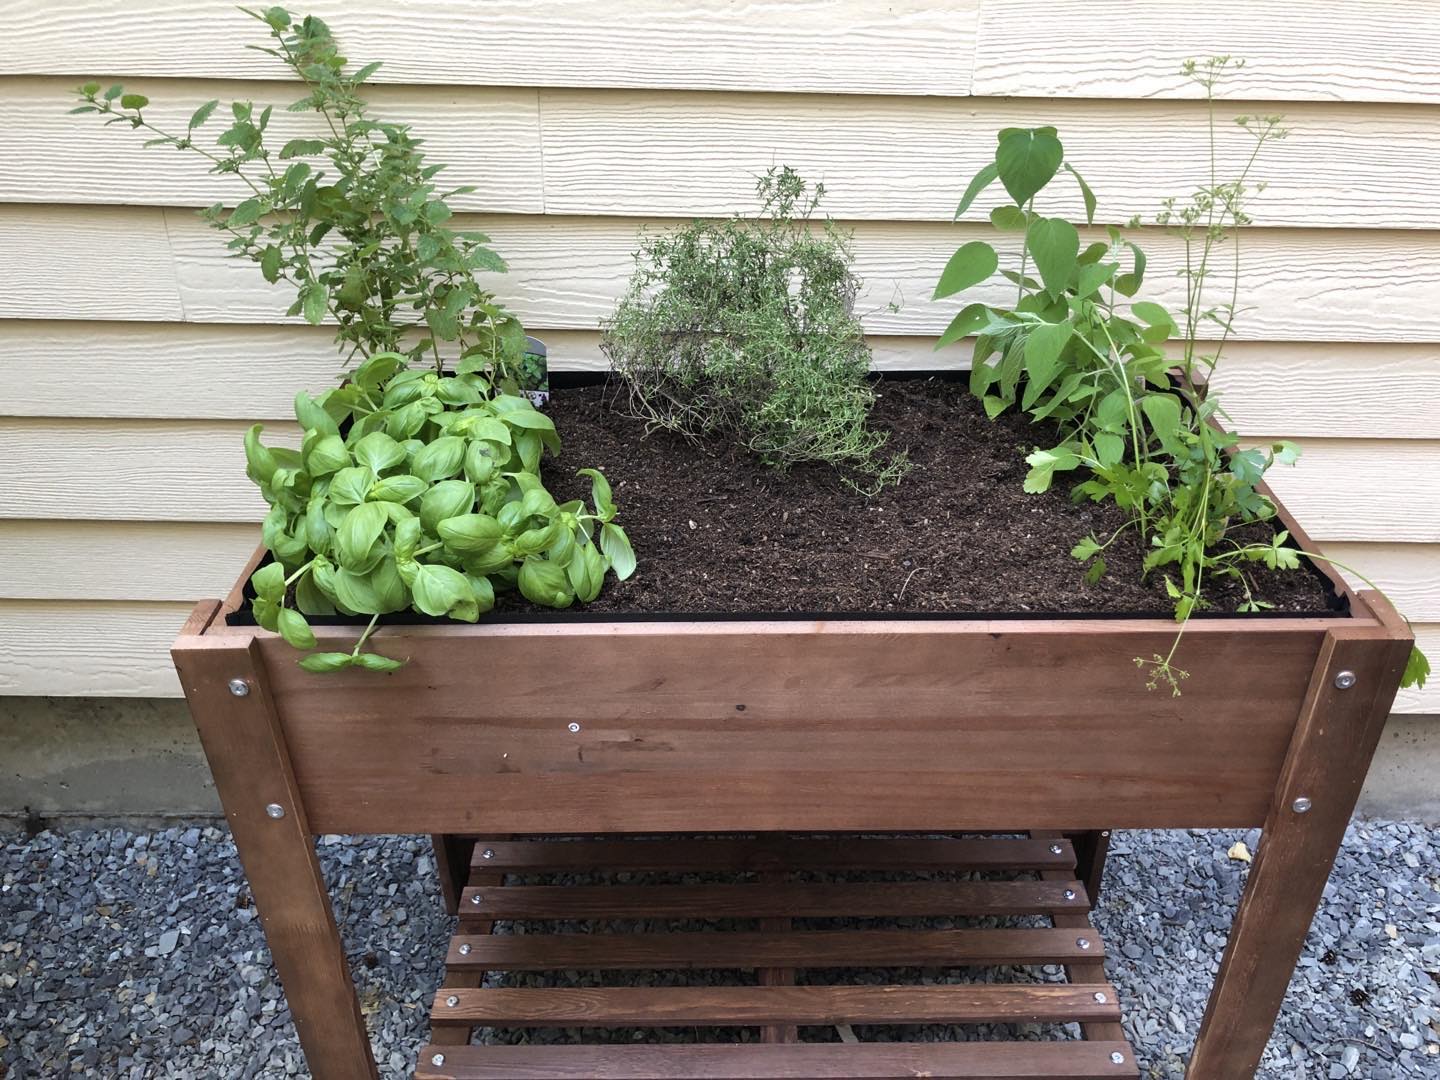 Our new raised bed for herbs 🪴 
-
-
#homeproject #skilledhusband #raisedbeds #herbgarden #herbs #magaságyás #fűszerek #myseattlepictures🌿#raisedbedkit #raisedbedkitchengarden #konyhakert #kertészkedés #gardening